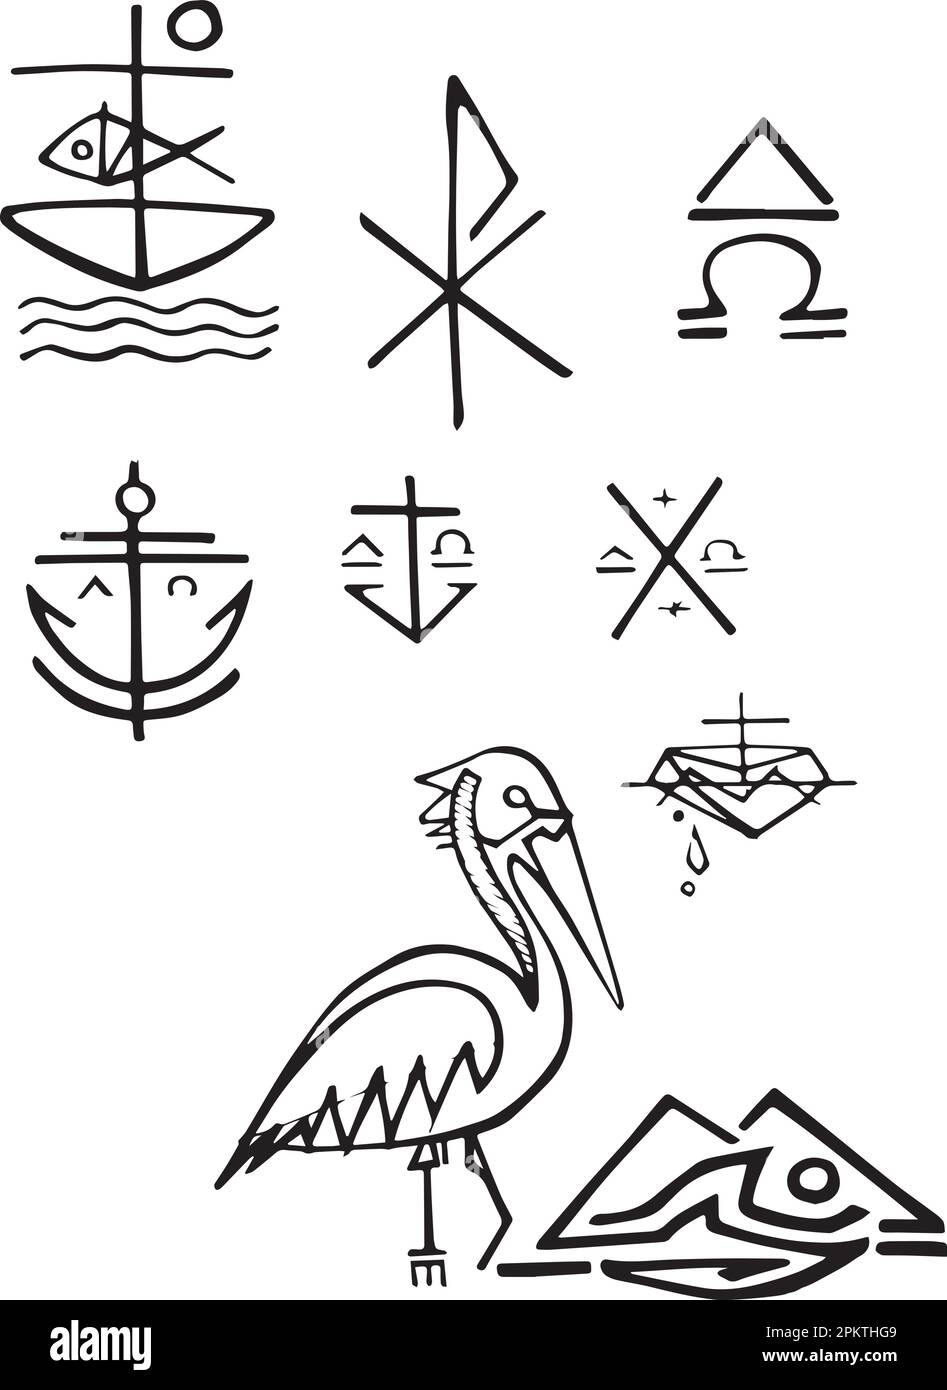 Hand drawn vector illustration or drawing of christian symbols Stock Vector